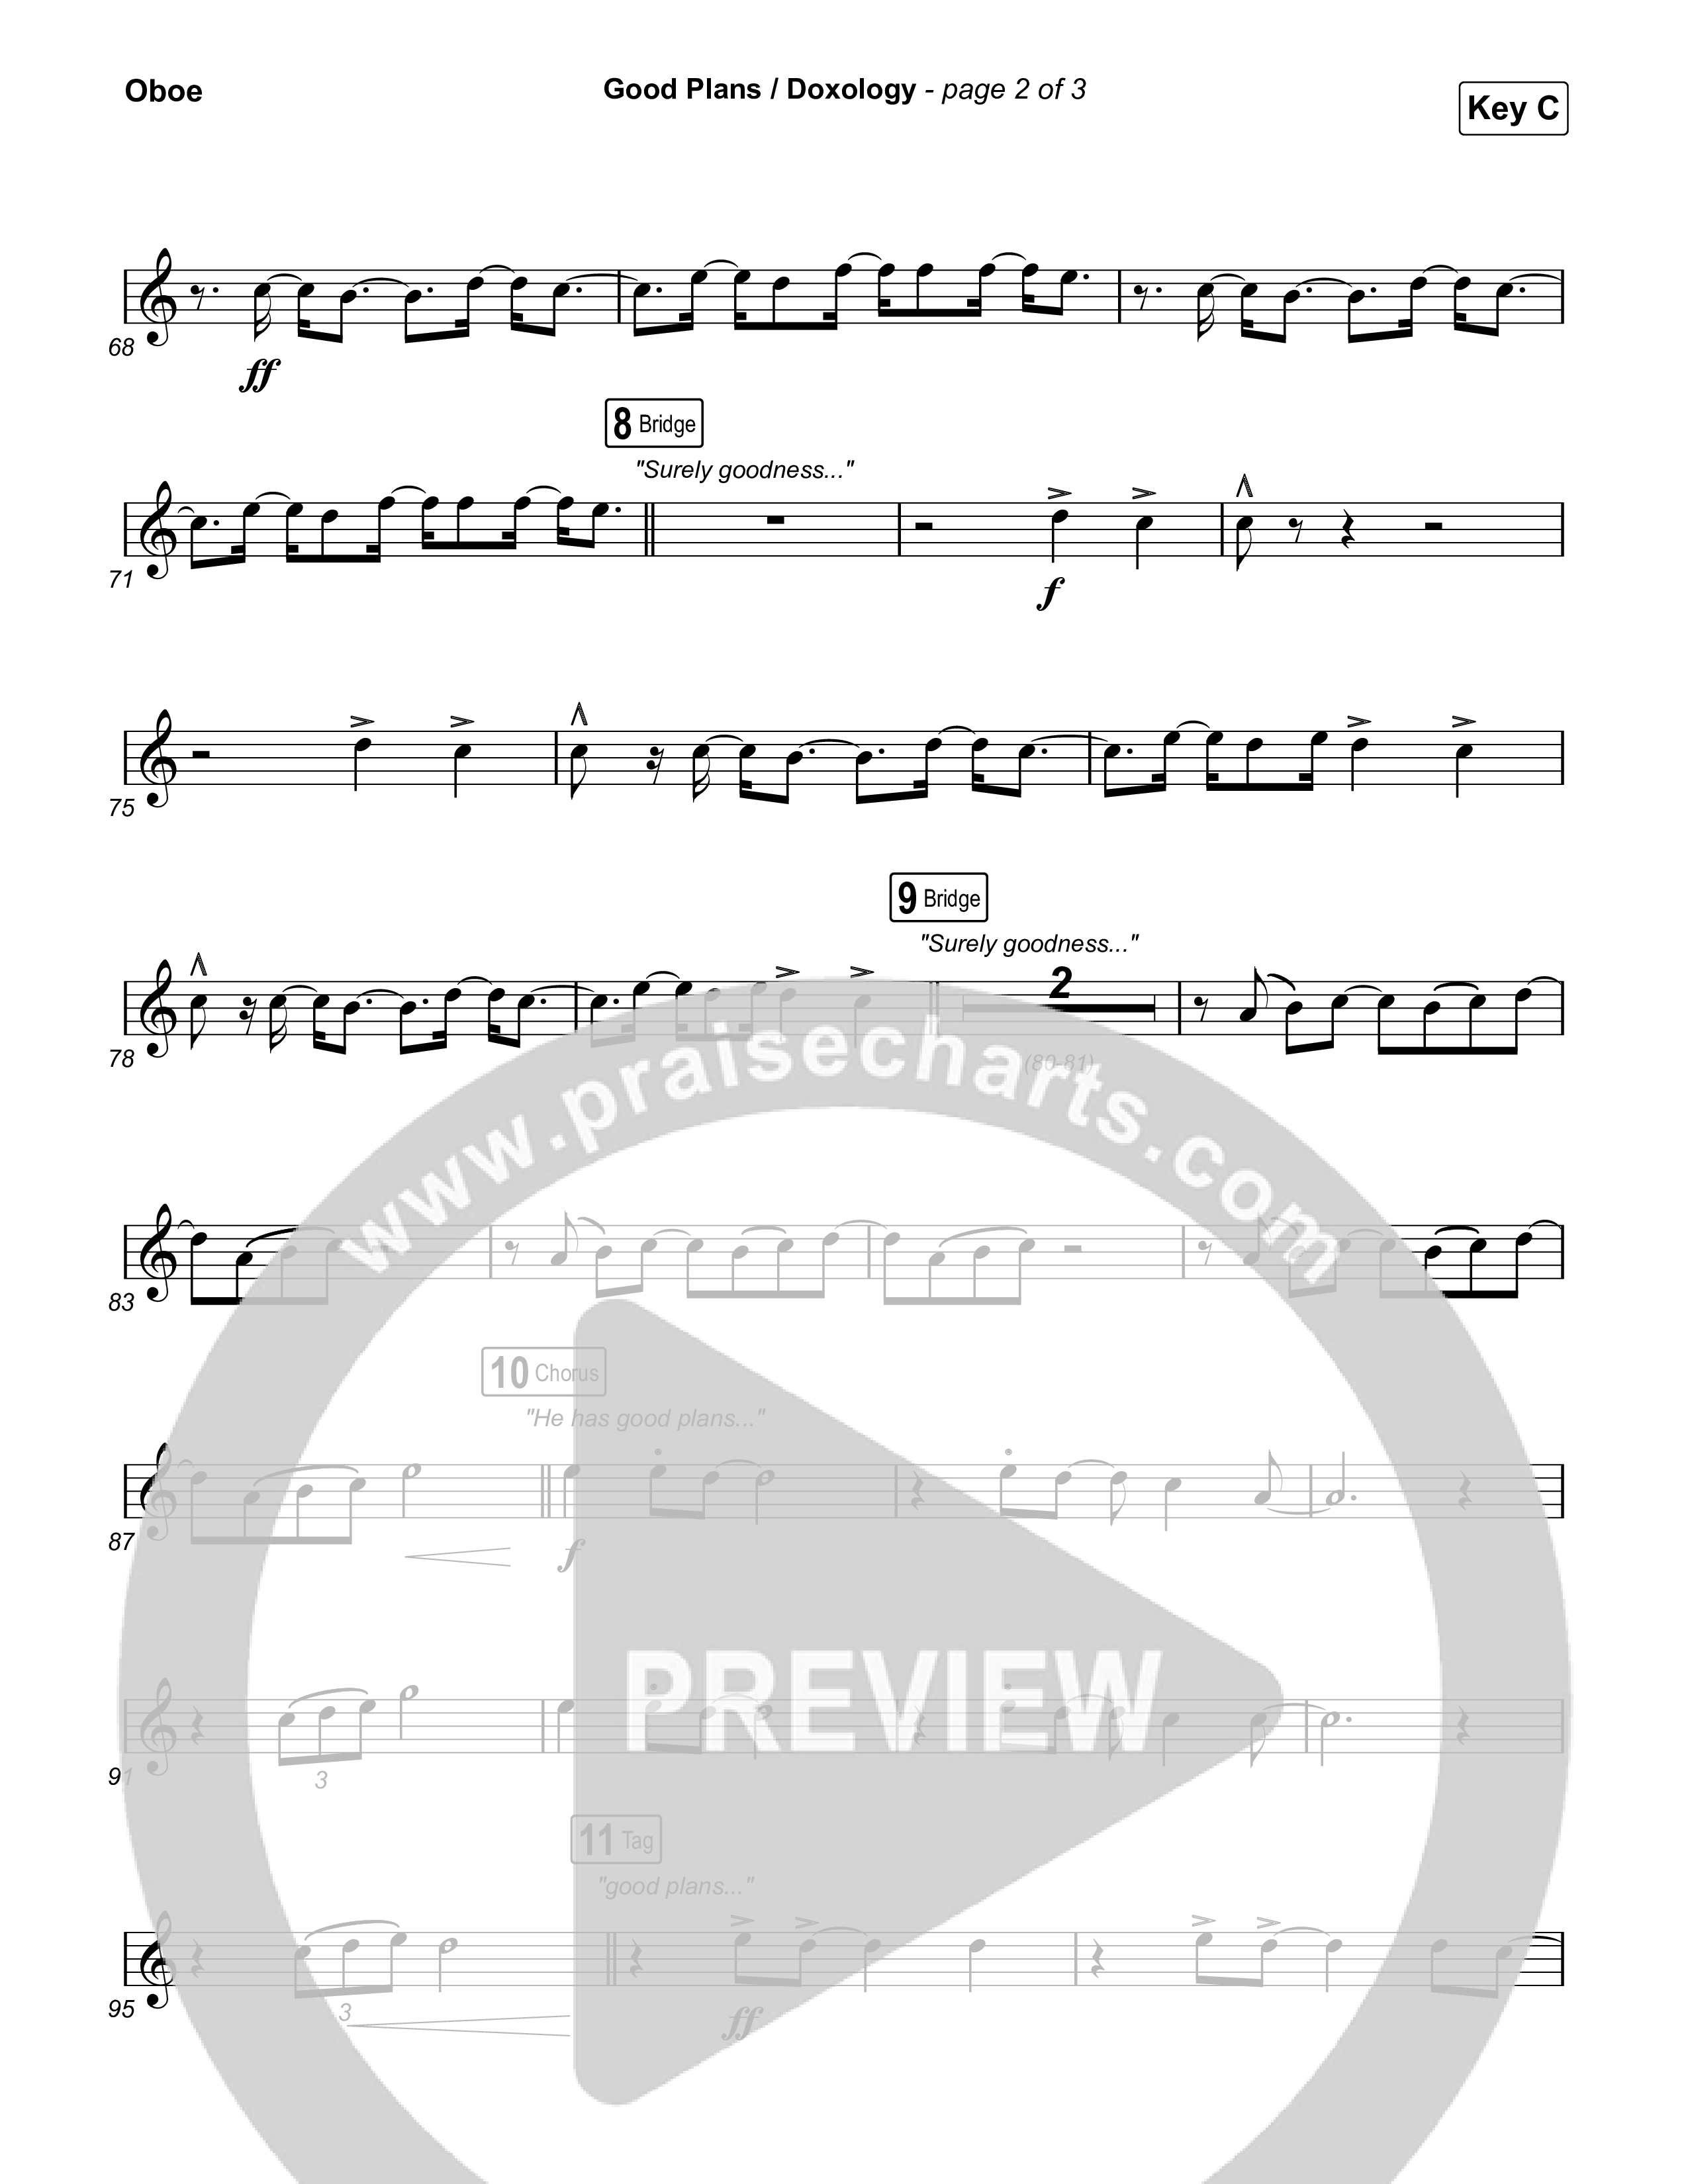 Good Plans/Doxology Oboe (Red Rocks Worship)